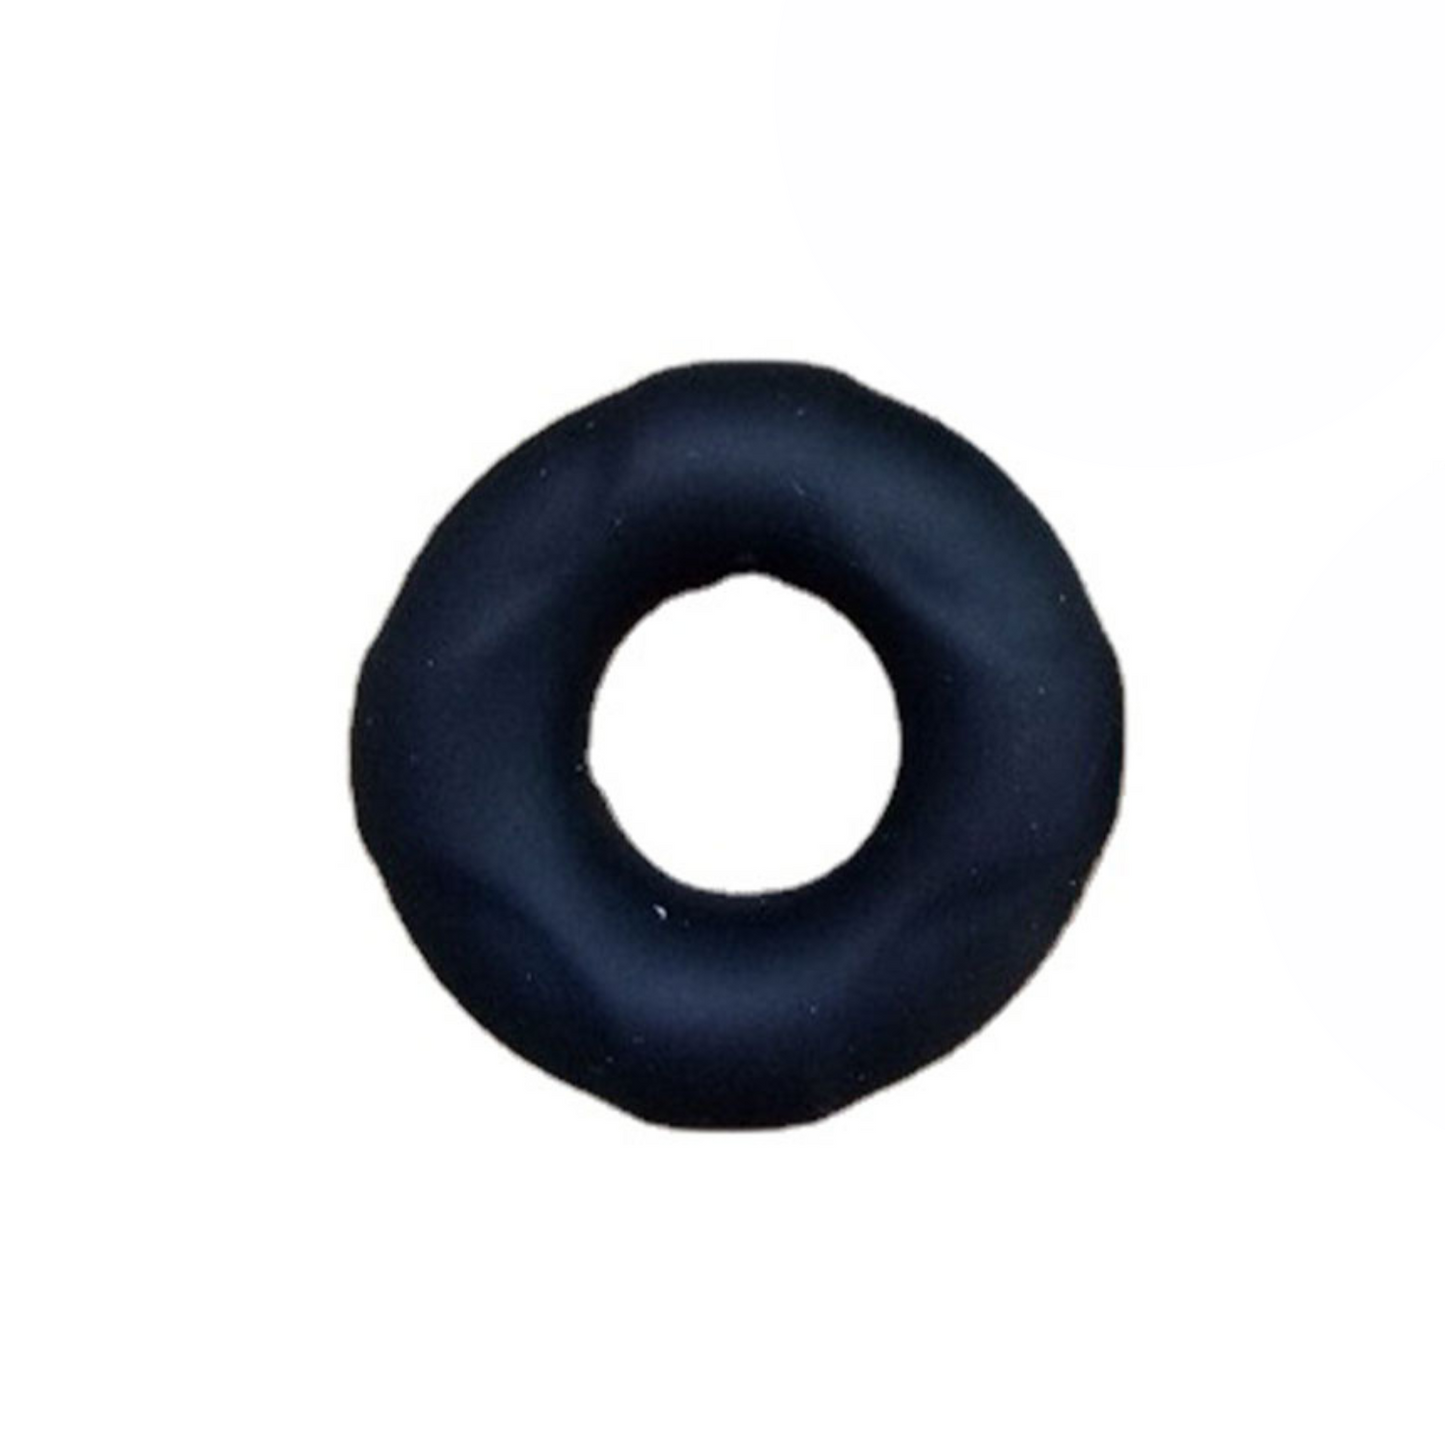 The Horny Company - John O 18mm Silicone Cock Ring Black Small